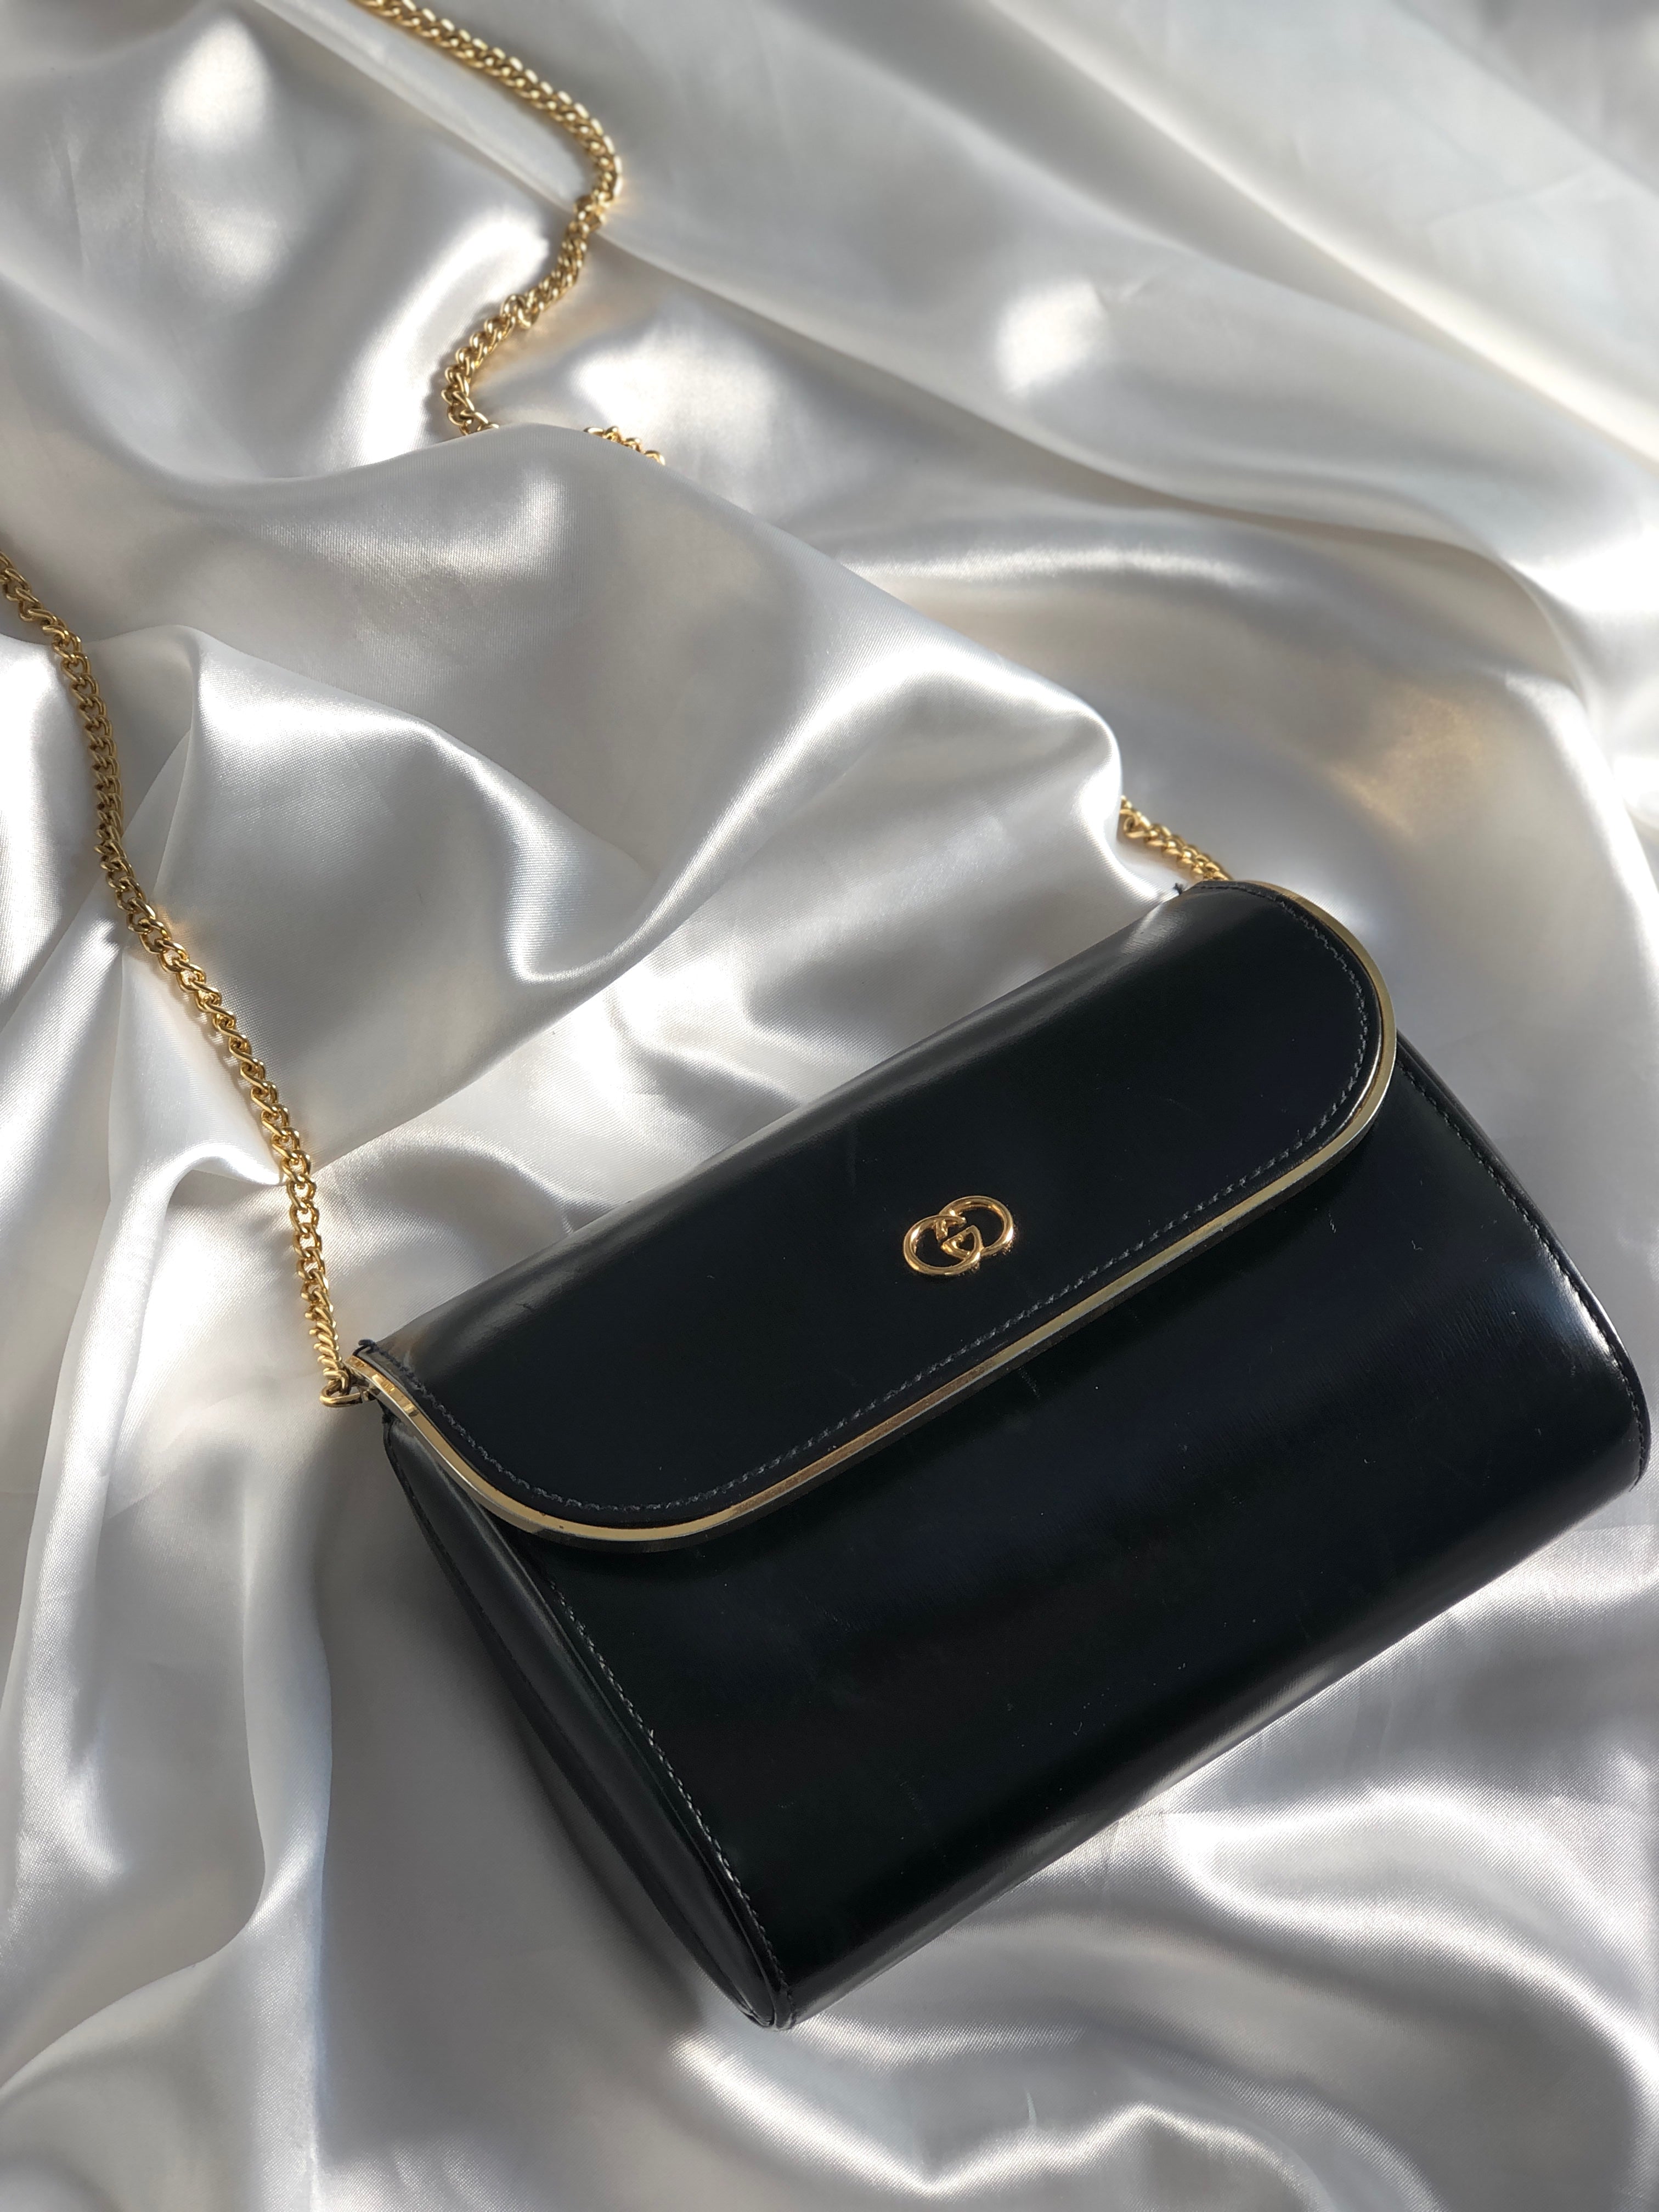 Classic black handbag with a gold chain.